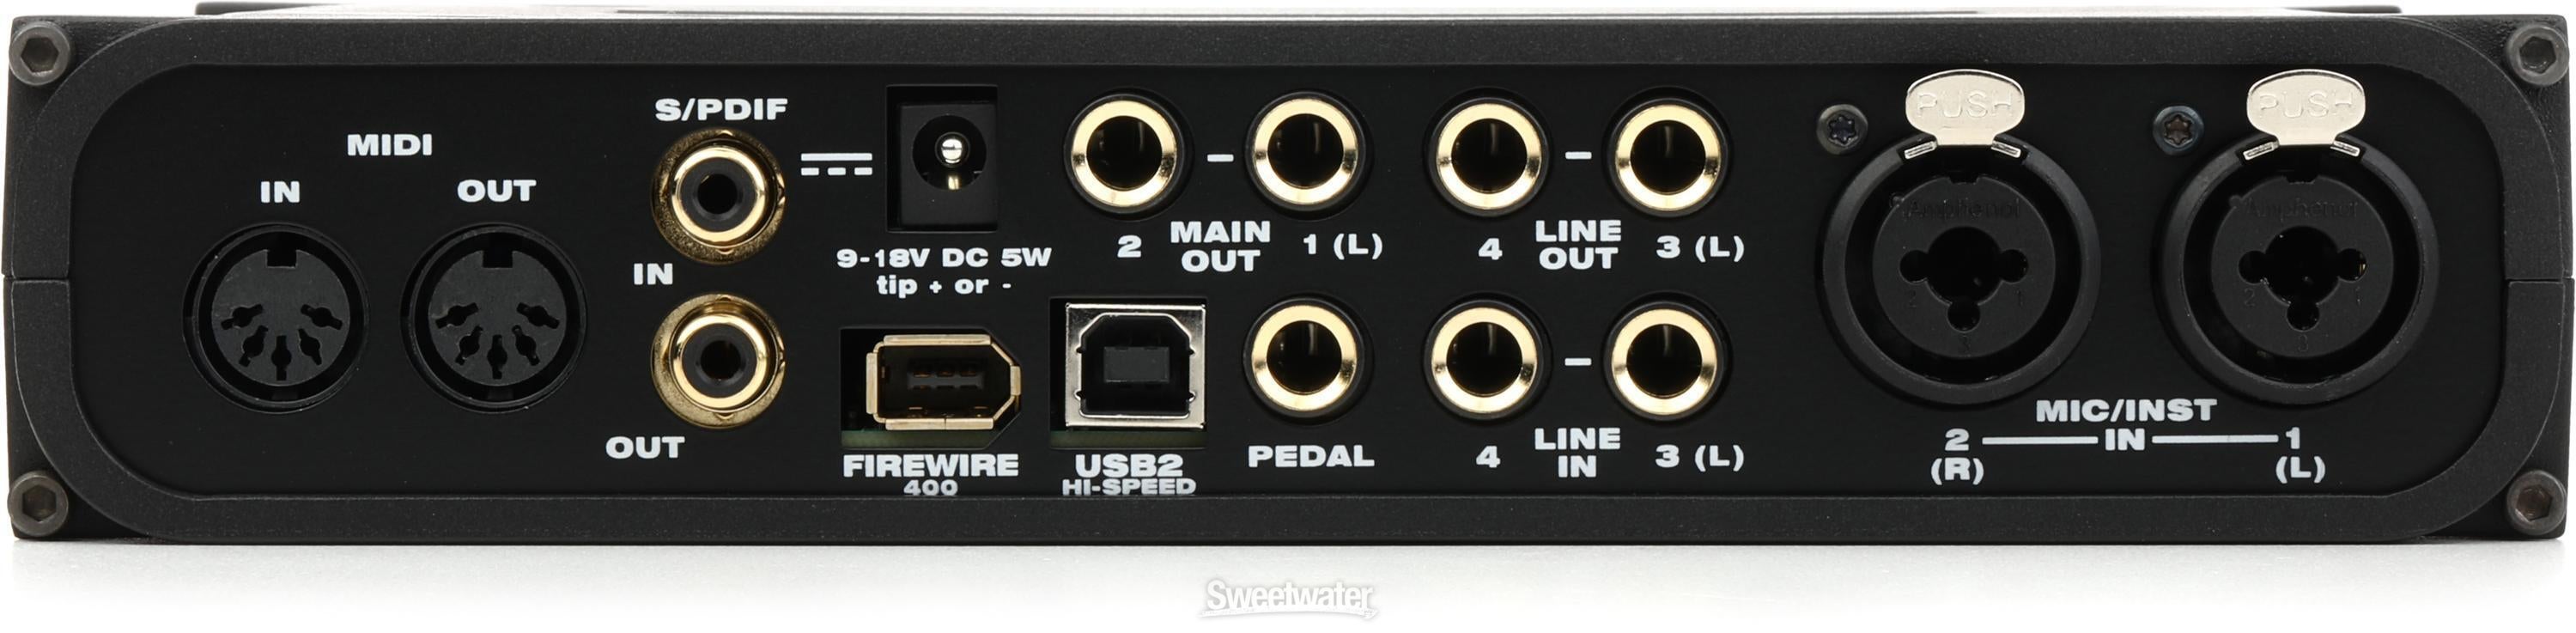 MOTU Audio Express USB / FireWire Audio Interface Reviews | Sweetwater